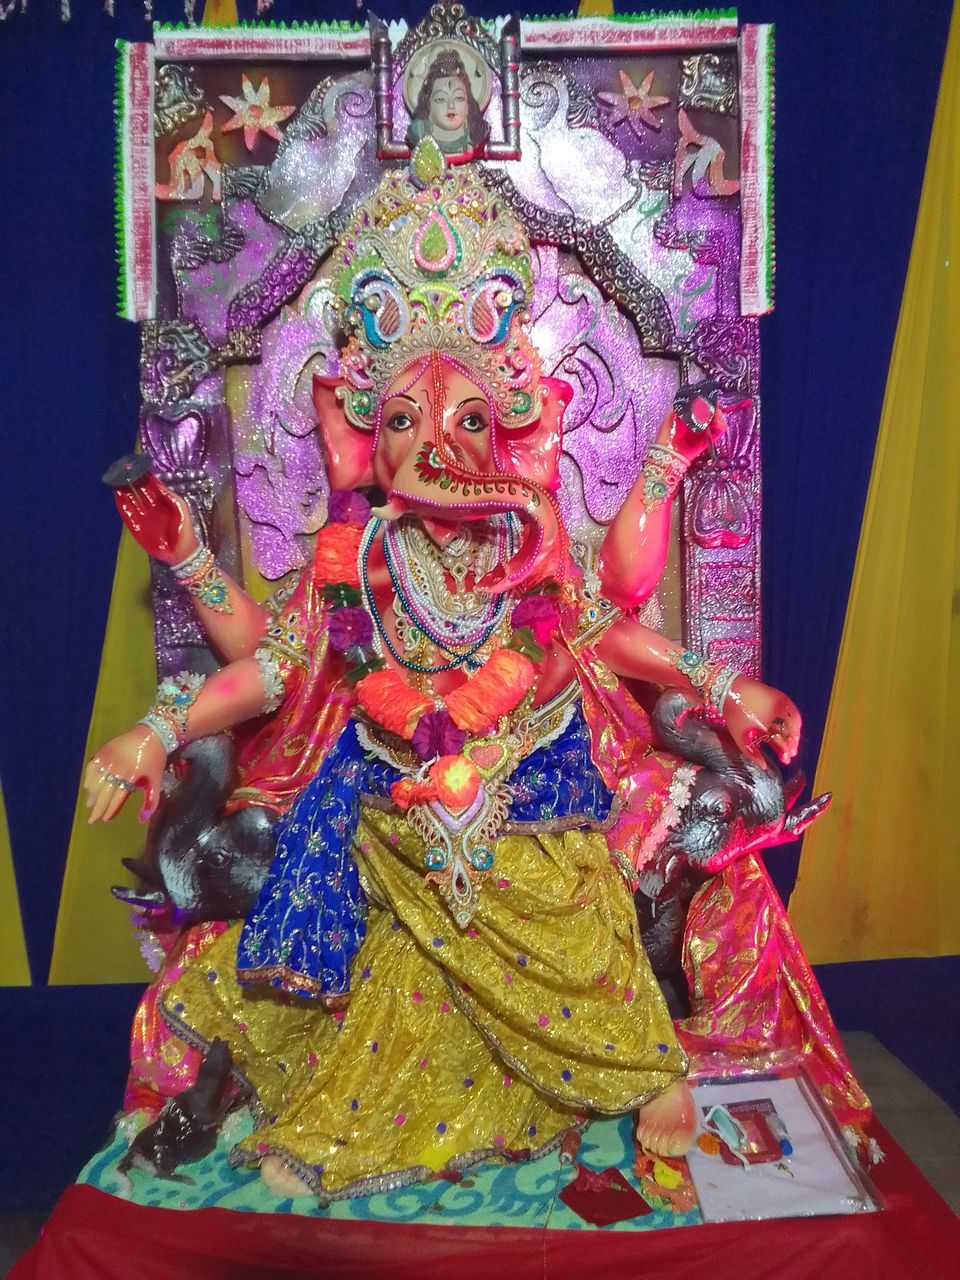 Indian God Ganesha India God Ganesha Ganesha Chaturthi God Ganesha God Ganesha Ganpati Ganpati Festival Ganpati Bappa Morya Tample Ganesha Statue Ganpati Statue